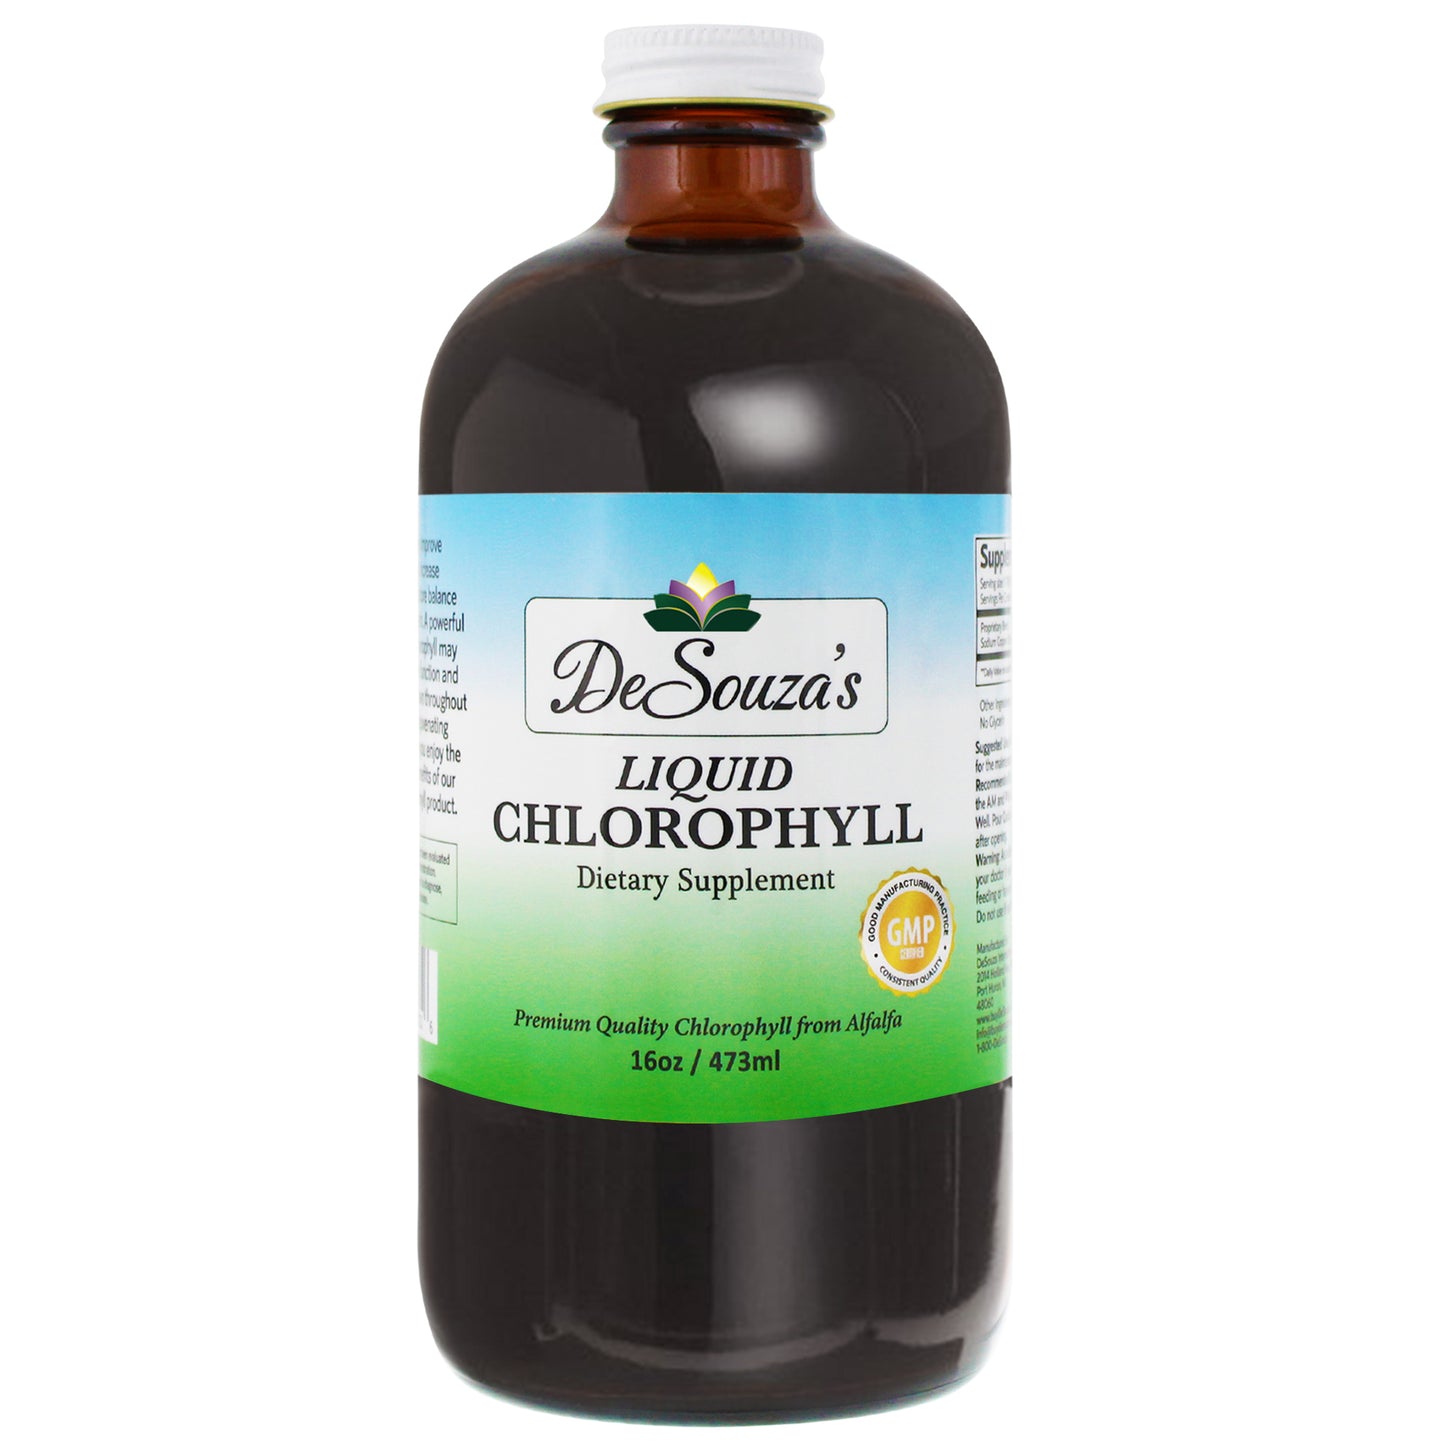 Liquid Chlorophyll from Alfalfa